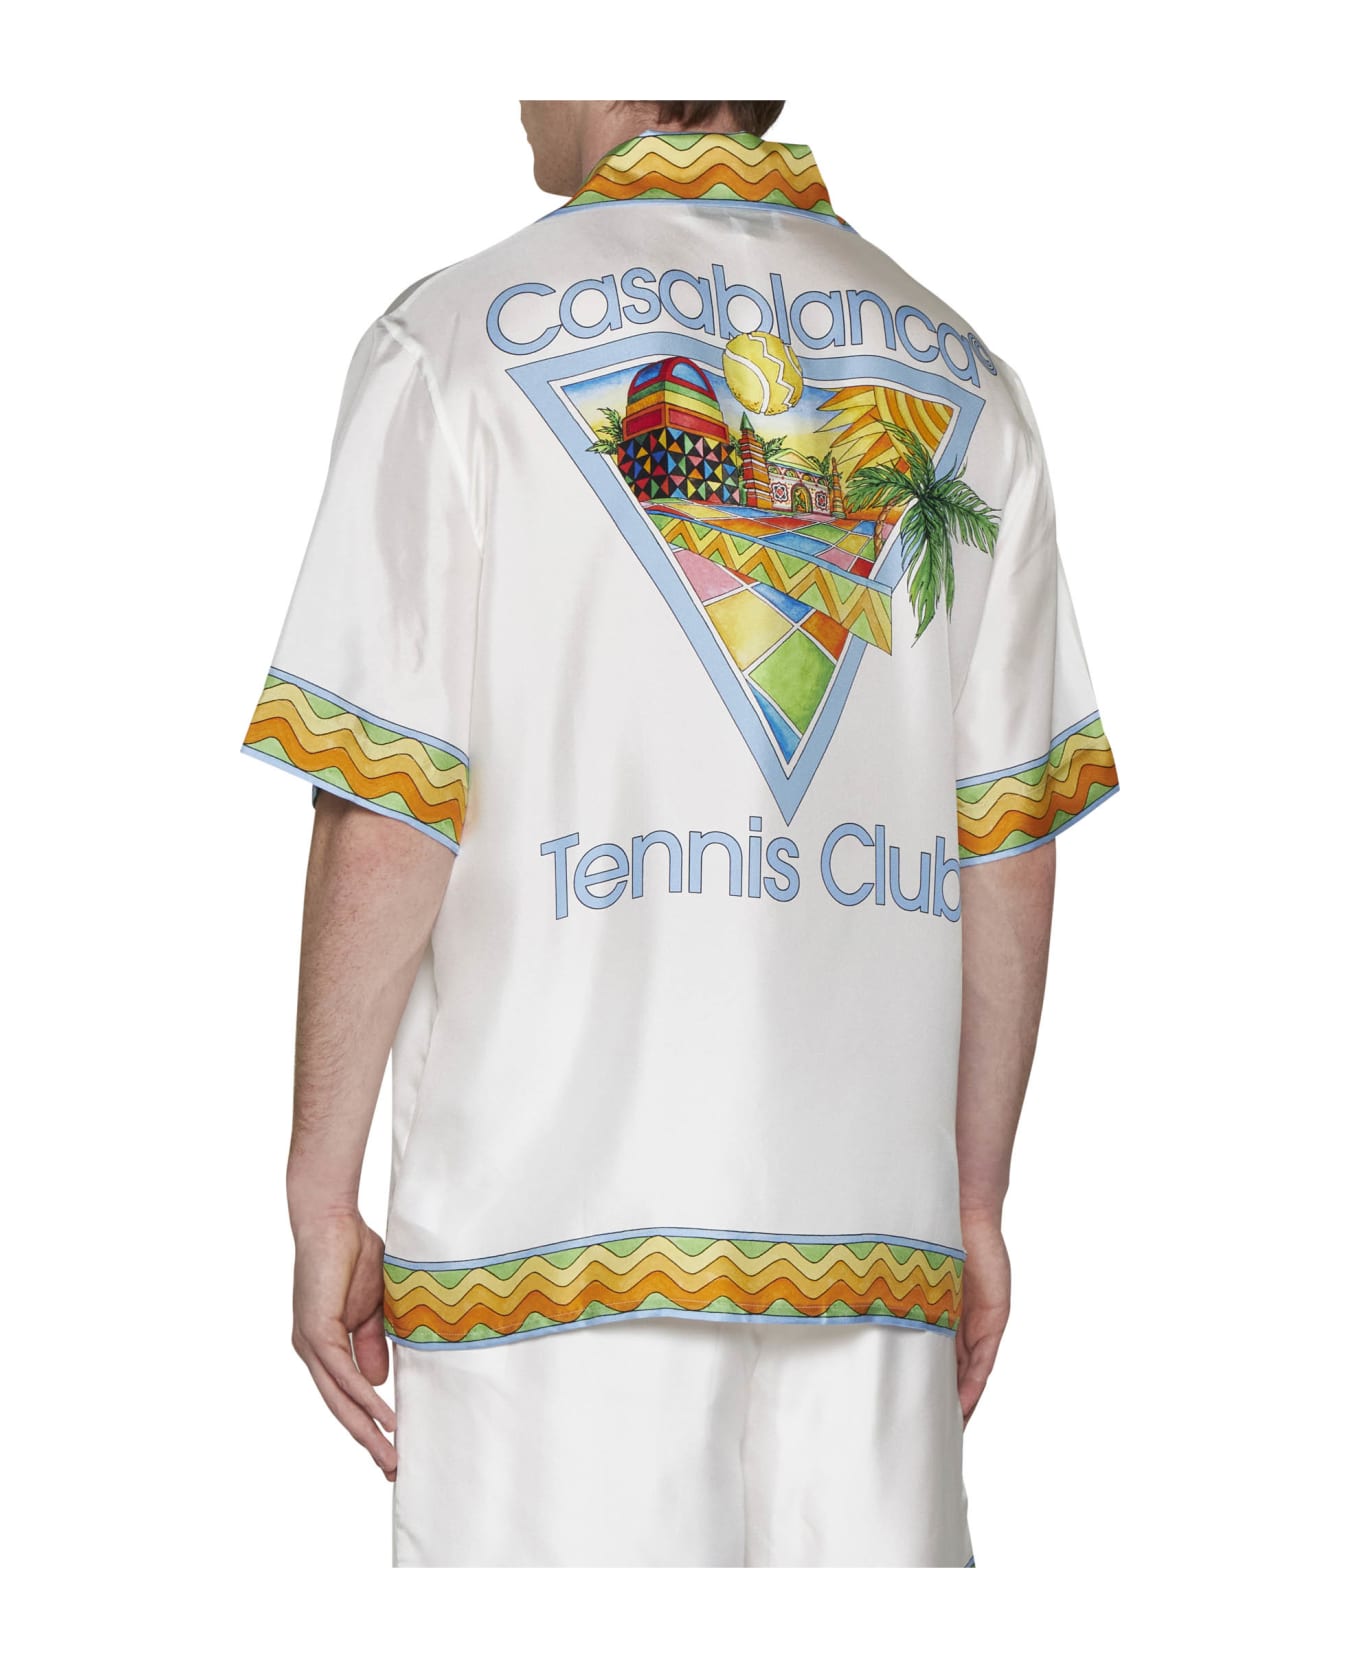 Casablanca Shirt - Afro cubism tennis club